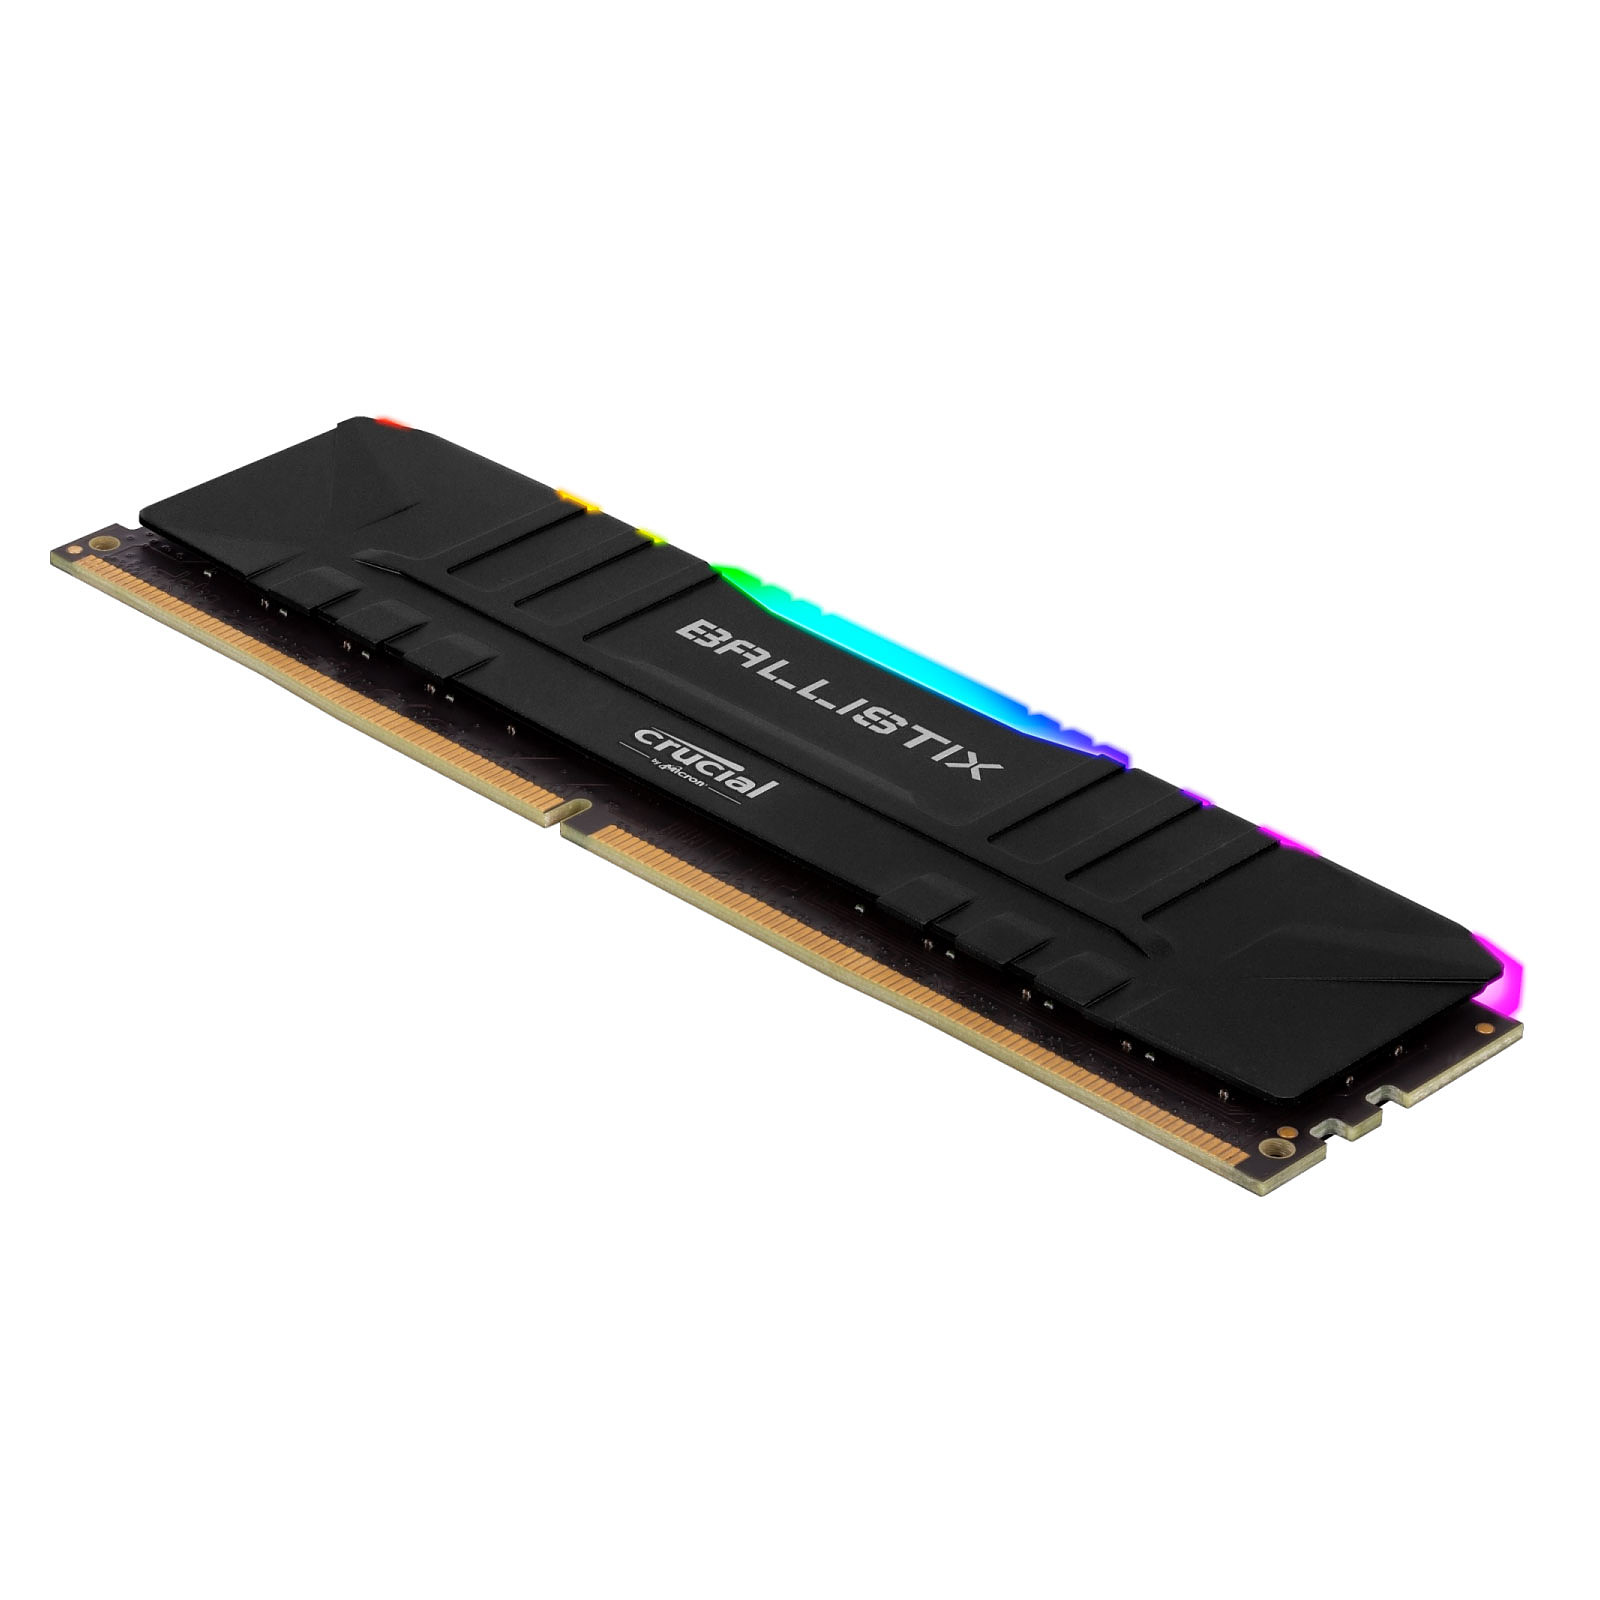 BALLISTIX - Mémoire PC RAM RGB - 16Go (2x8Go) - 3200MHz - DDR4